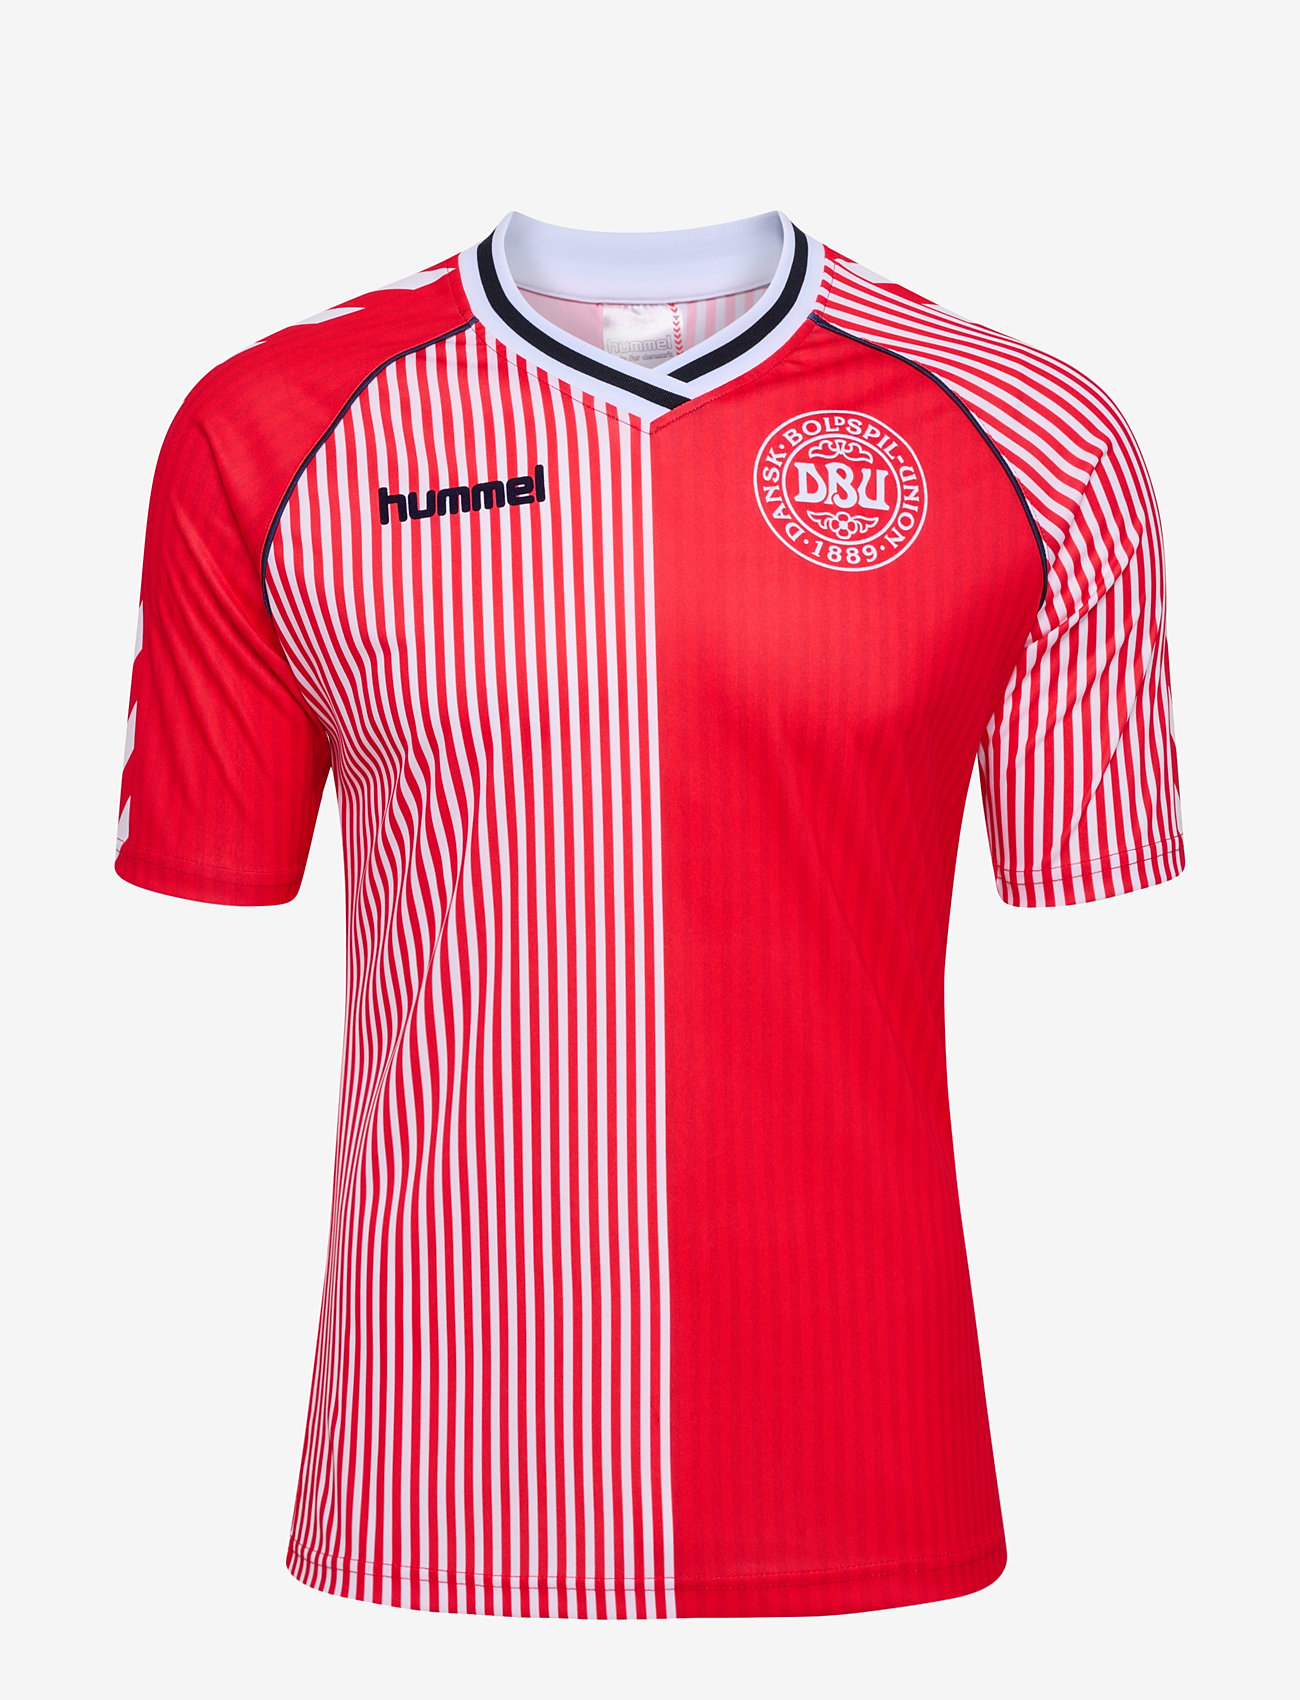 Hummel - DBU 86 REPLICA JERSEY S/S - futbolo marškinėliai - red/white - 0